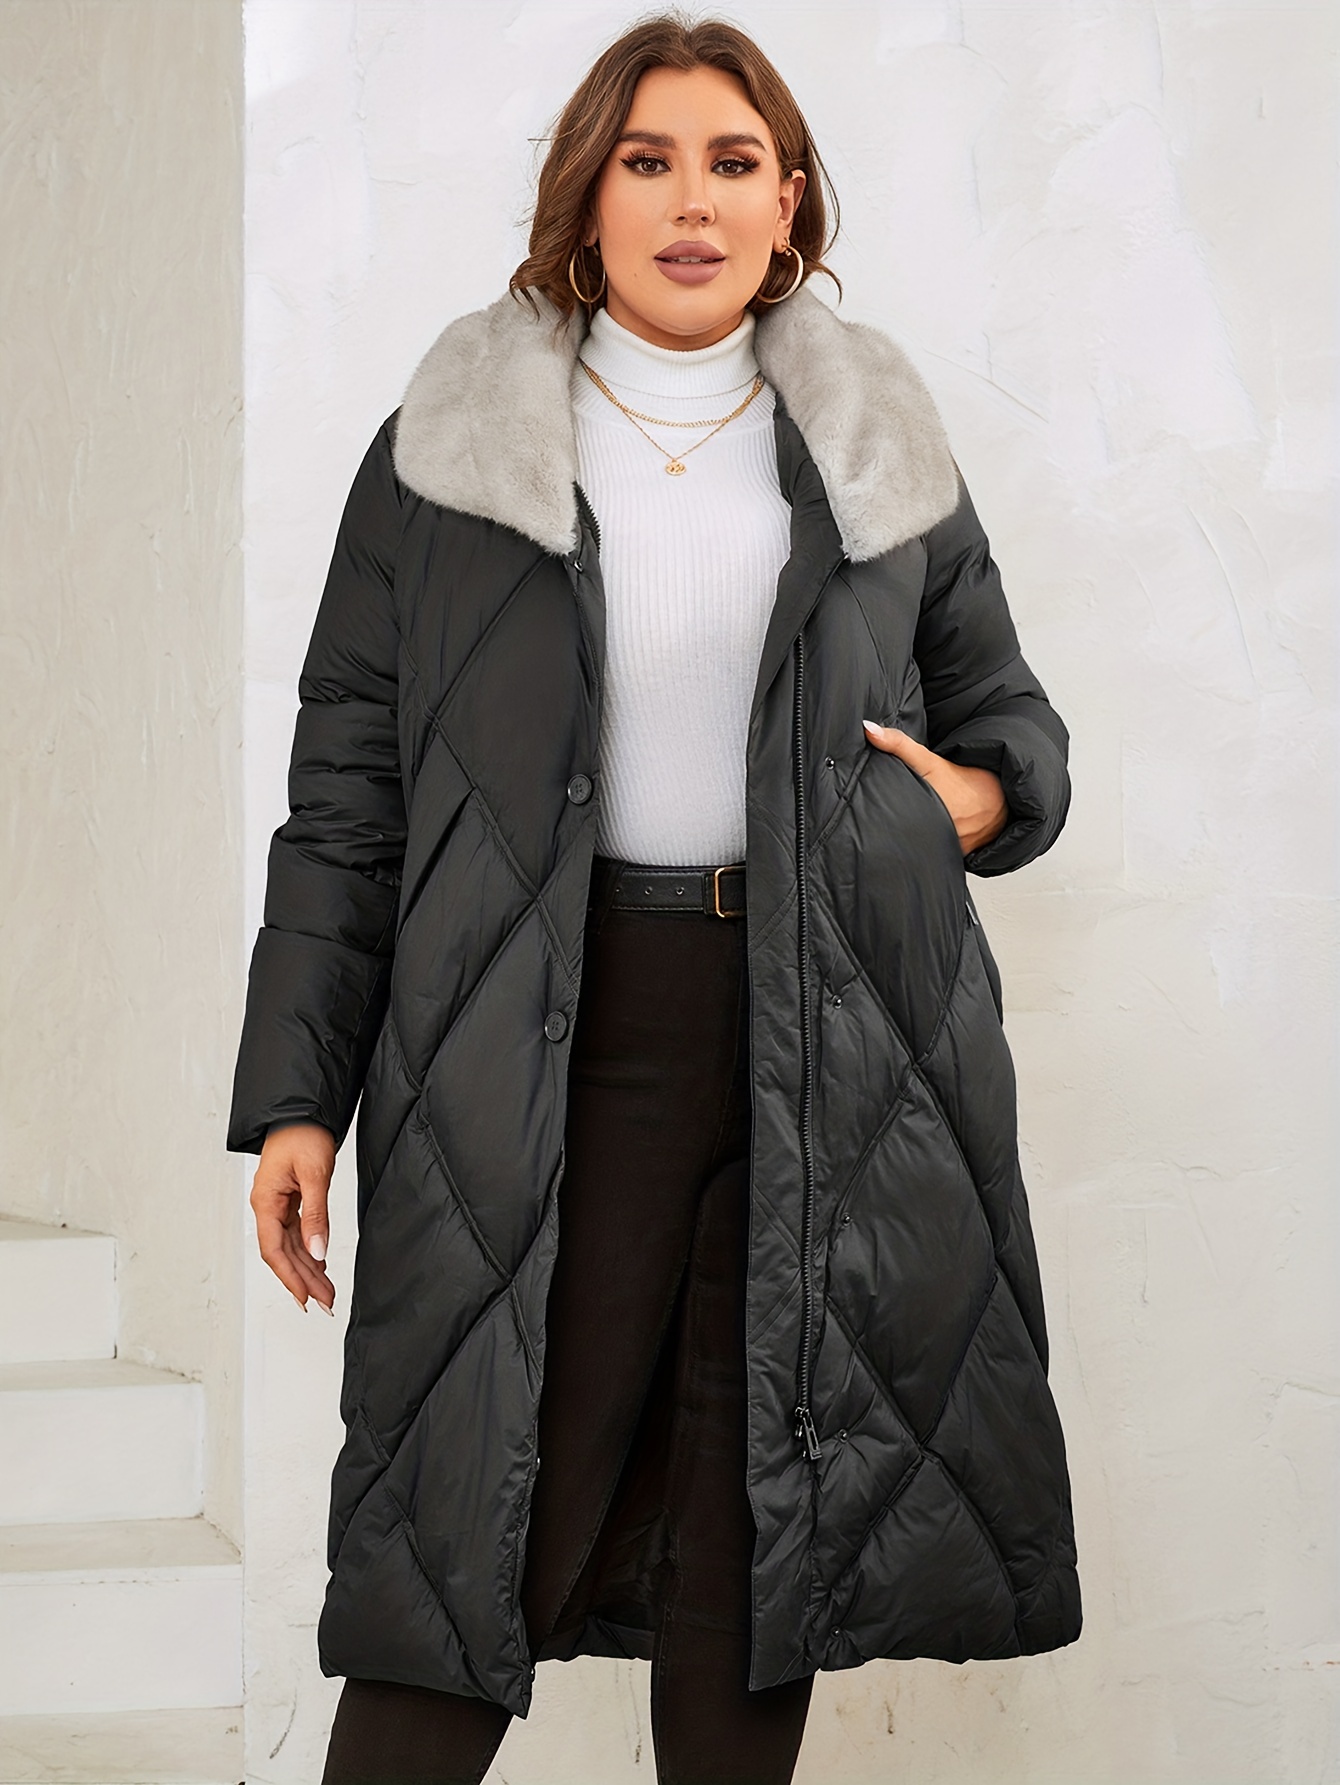 Wool Swing Coat Women, Winter Coat Plus Size, White Coat With Lining, Short  Warm Coat 